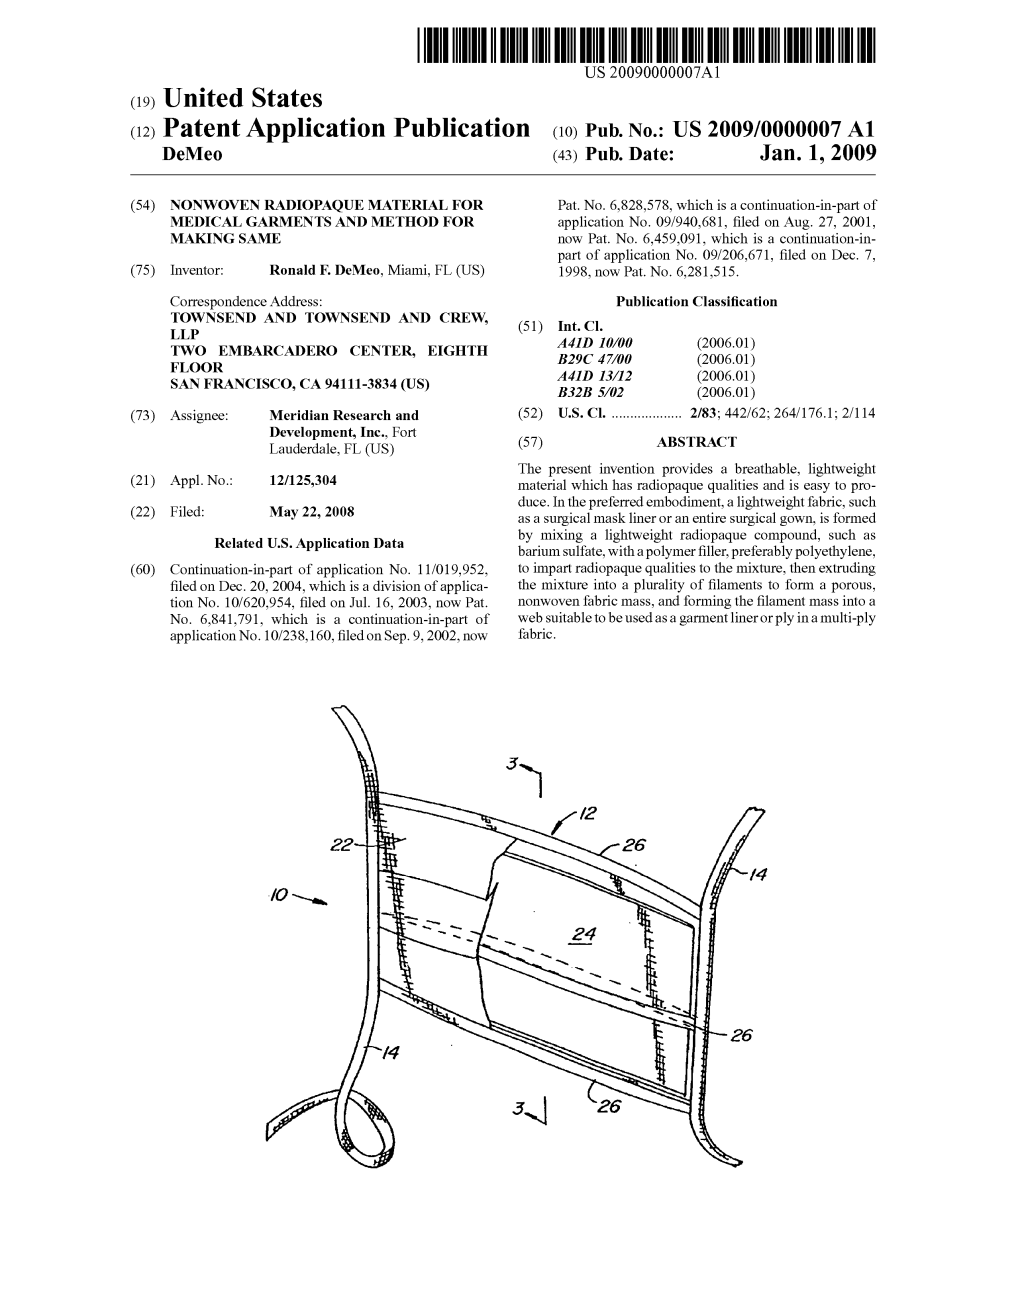 (12) Patent Application Publication (10) Pub. No.: US 2009/0000007 A1 Demeo (43) Pub